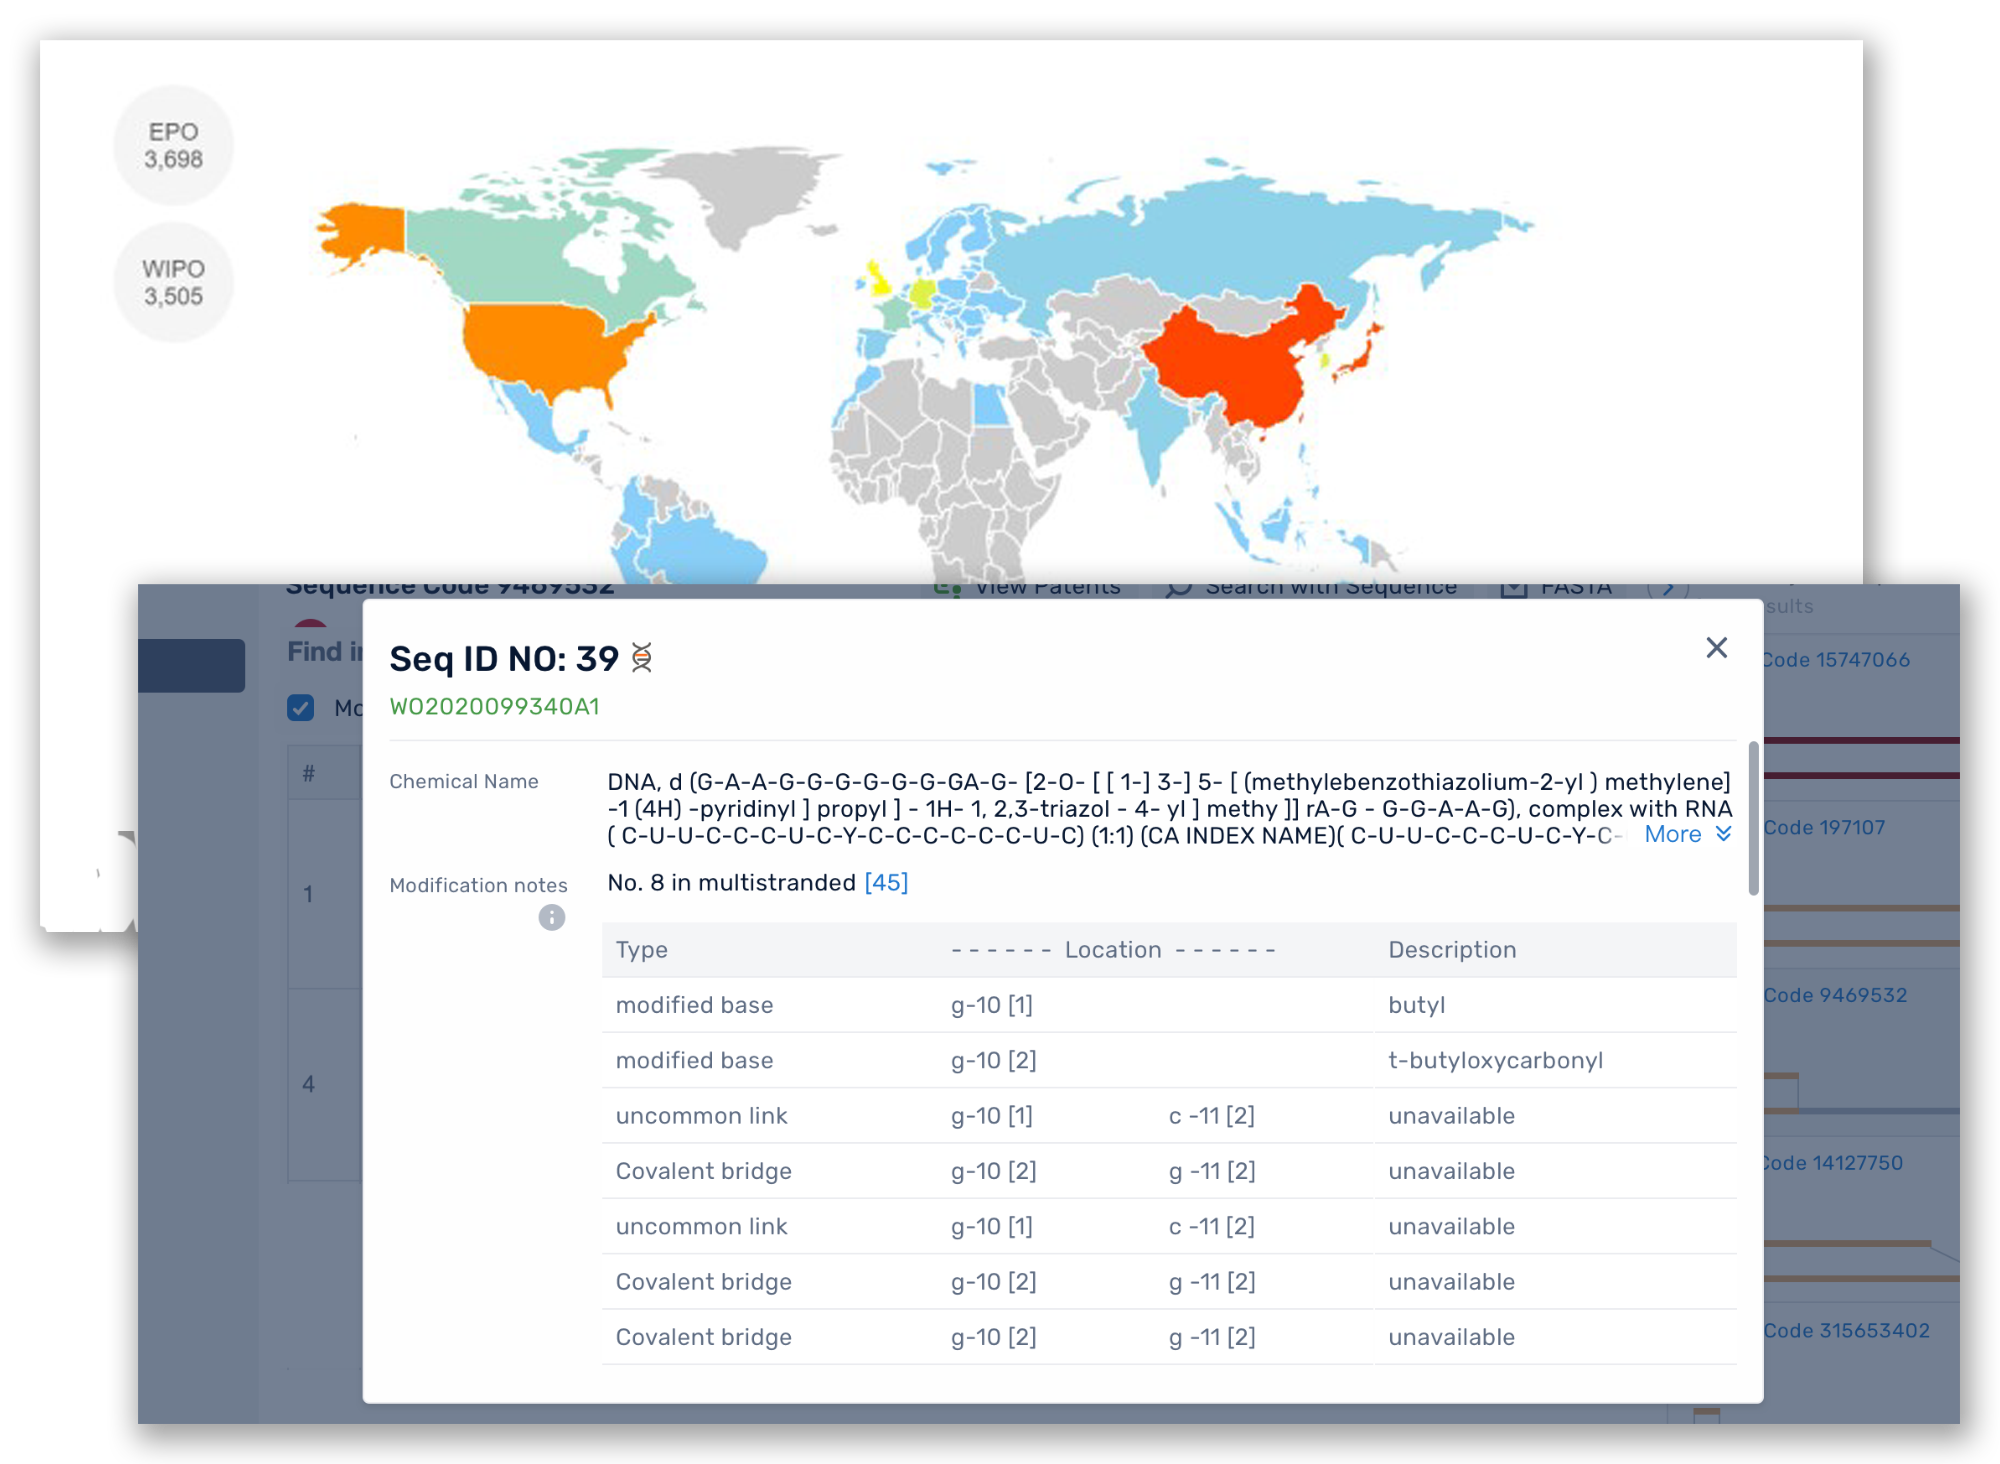 PatSnap Bio screen grab showing EPO and WIPO coverage